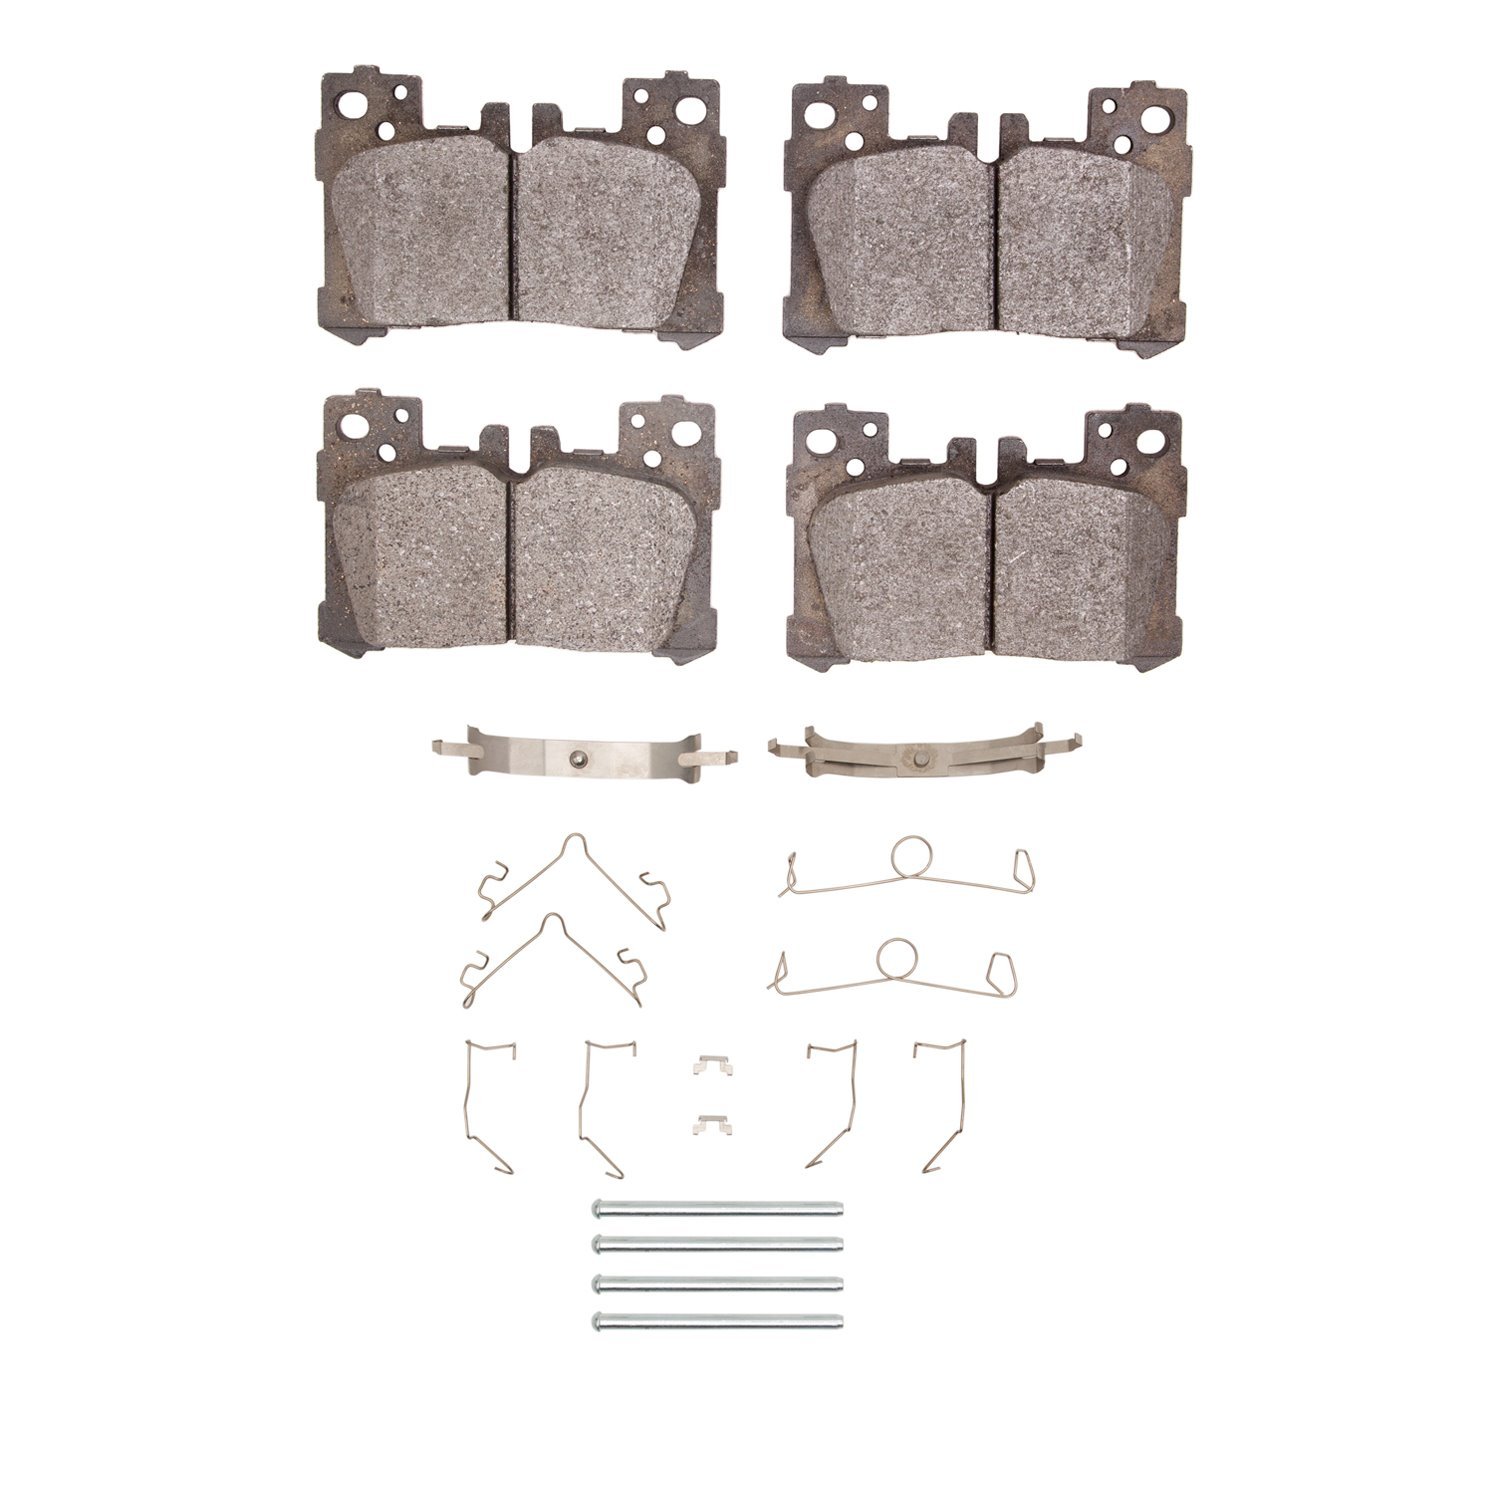 1310-2063-01 3000-Series Ceramic Brake Pads & Hardware Kit, Fits Select Lexus/Toyota/Scion, Position: Rear